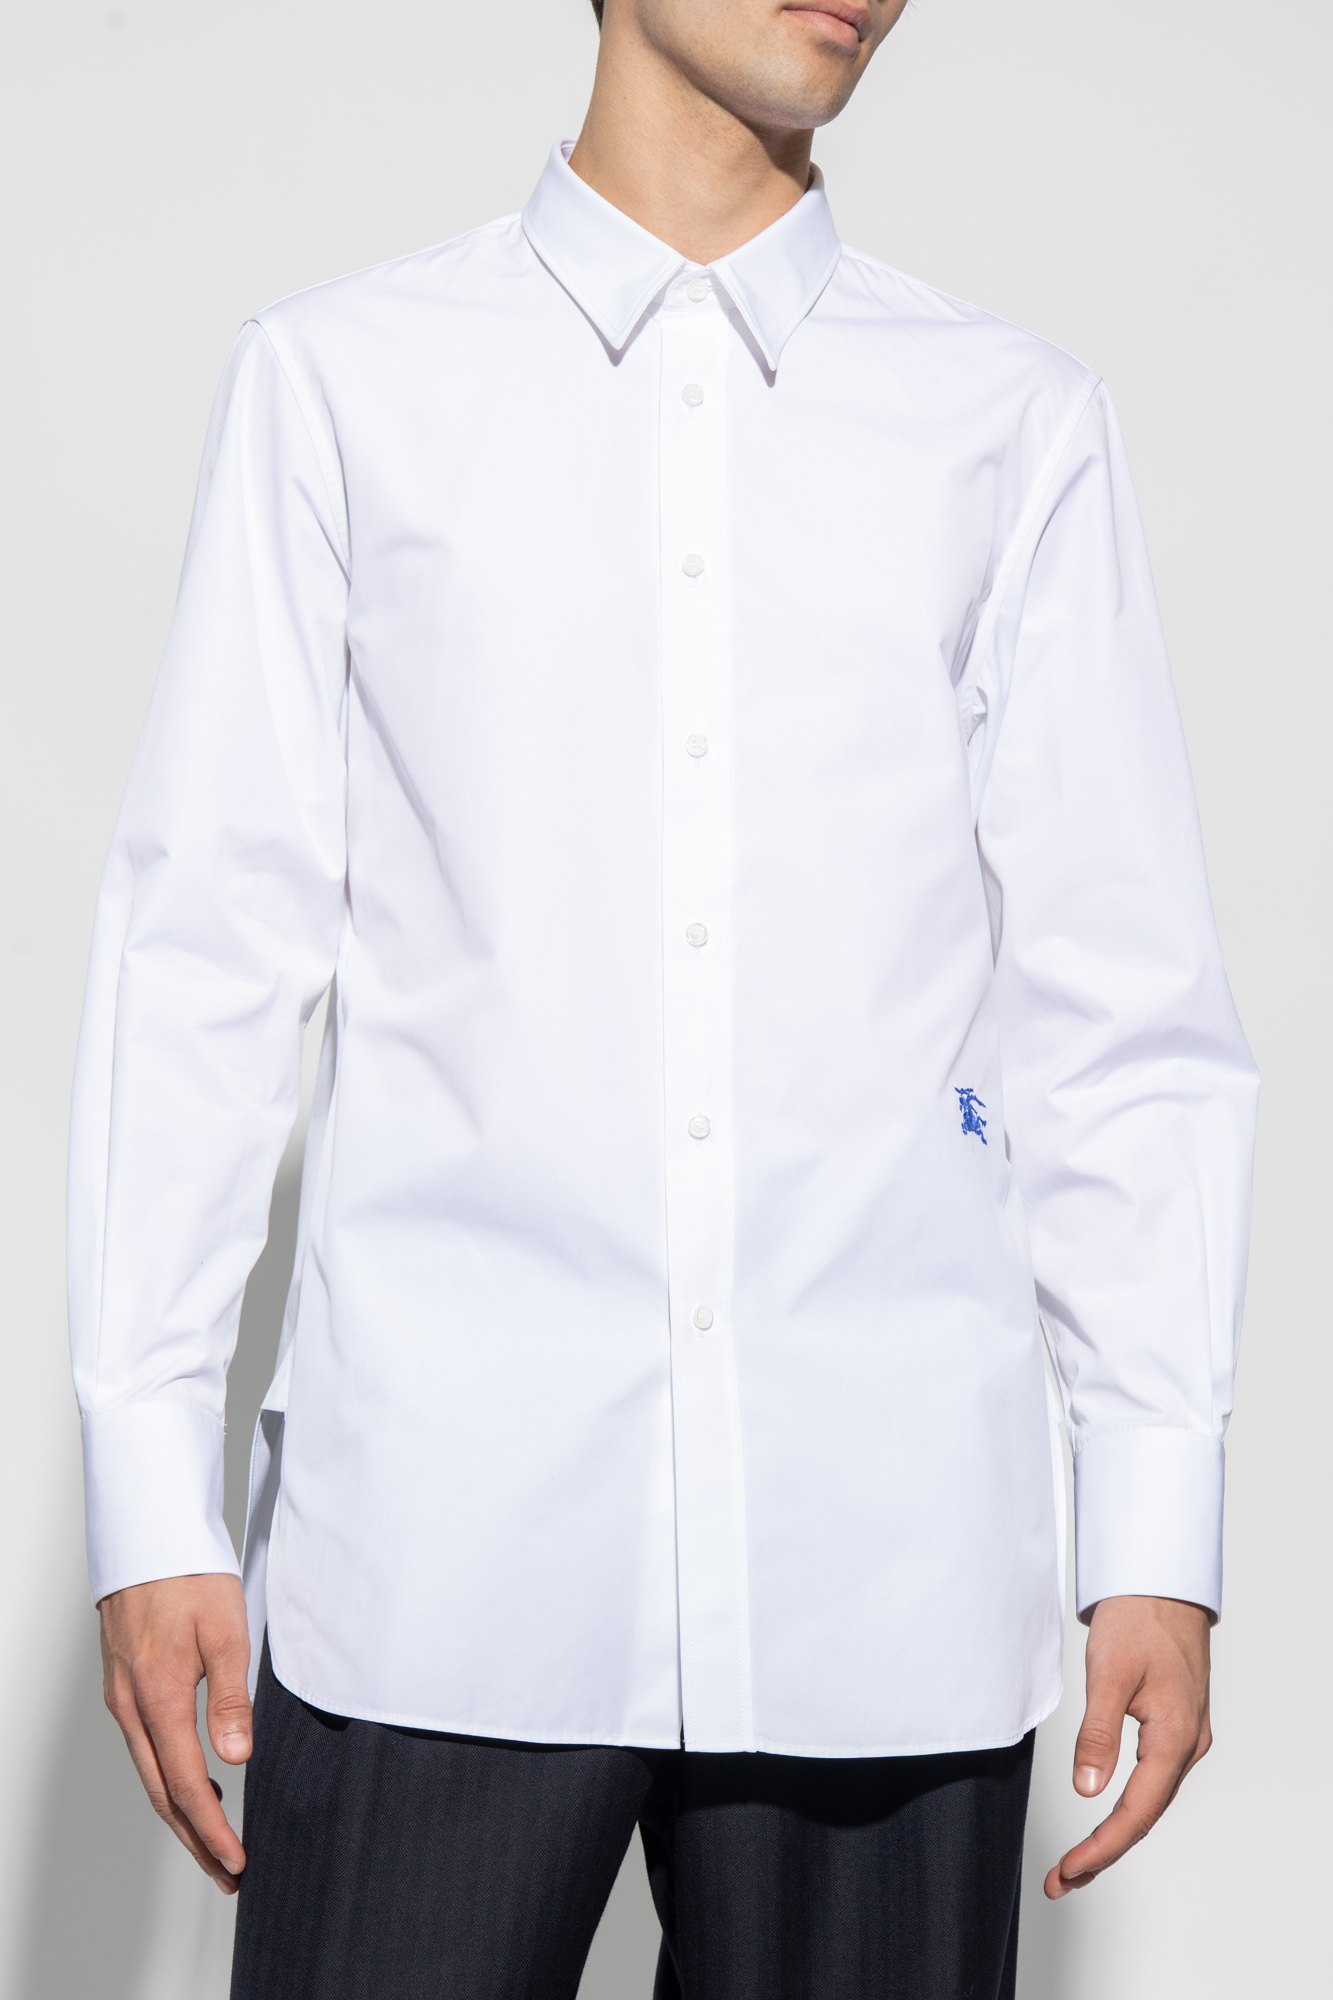 Burberry Shirt with logo | Men's Clothing | Vitkac